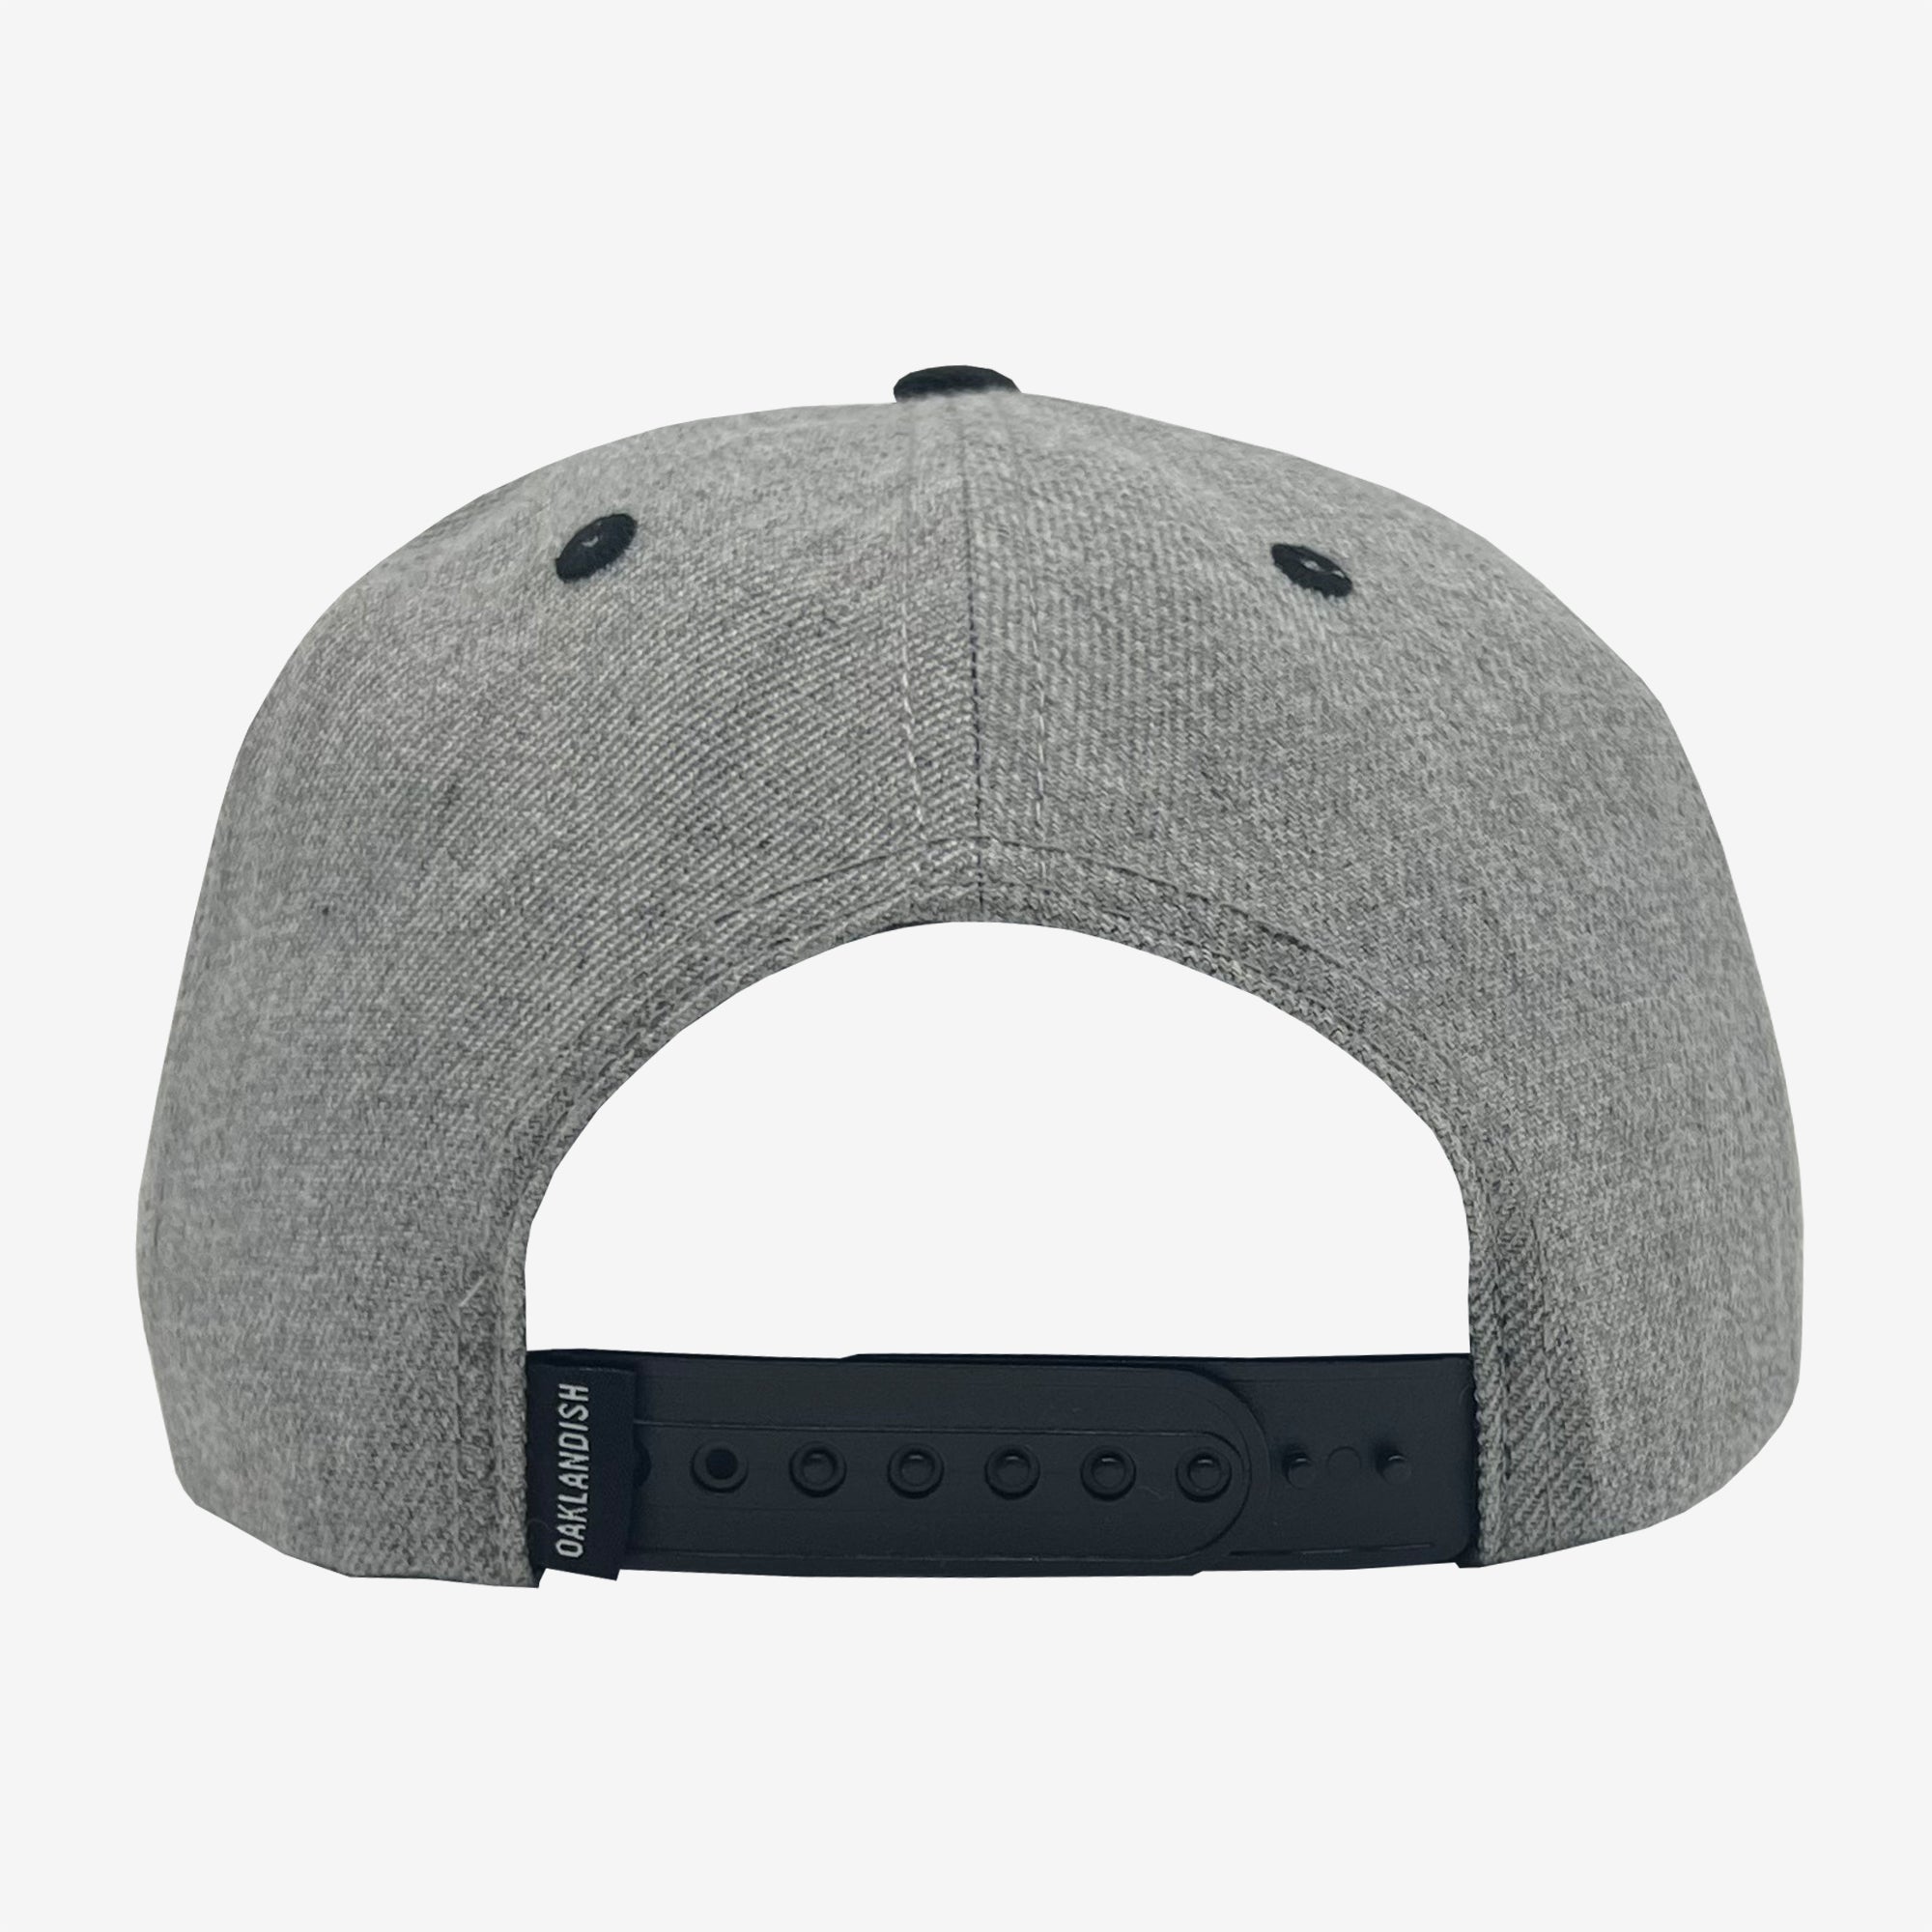 Back of grey cap with black plastic snap back adjustable closure.